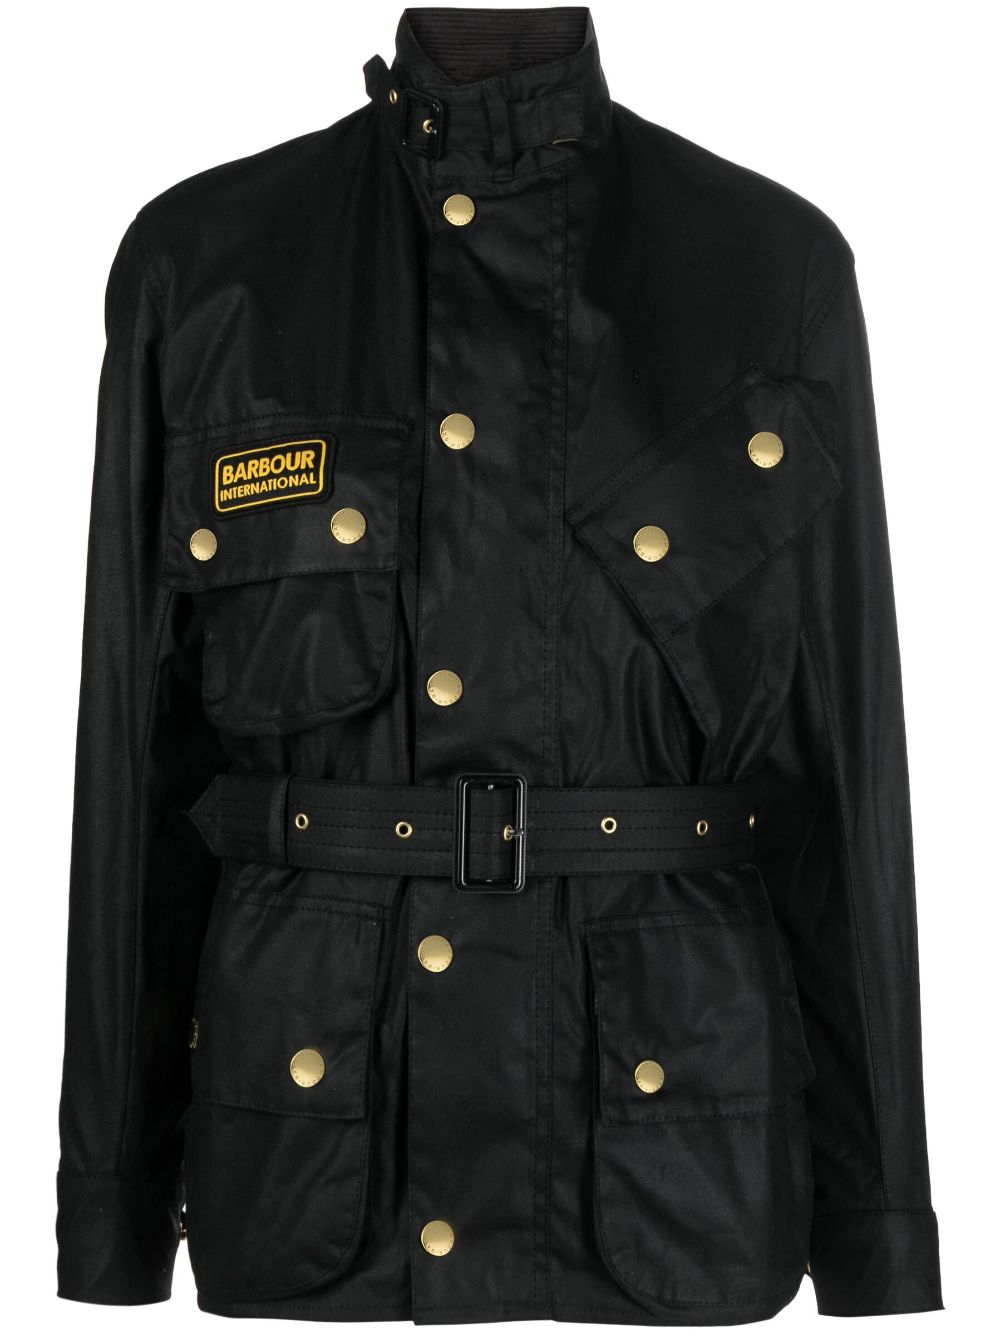 Barbour International belted military jacket - WARDROB